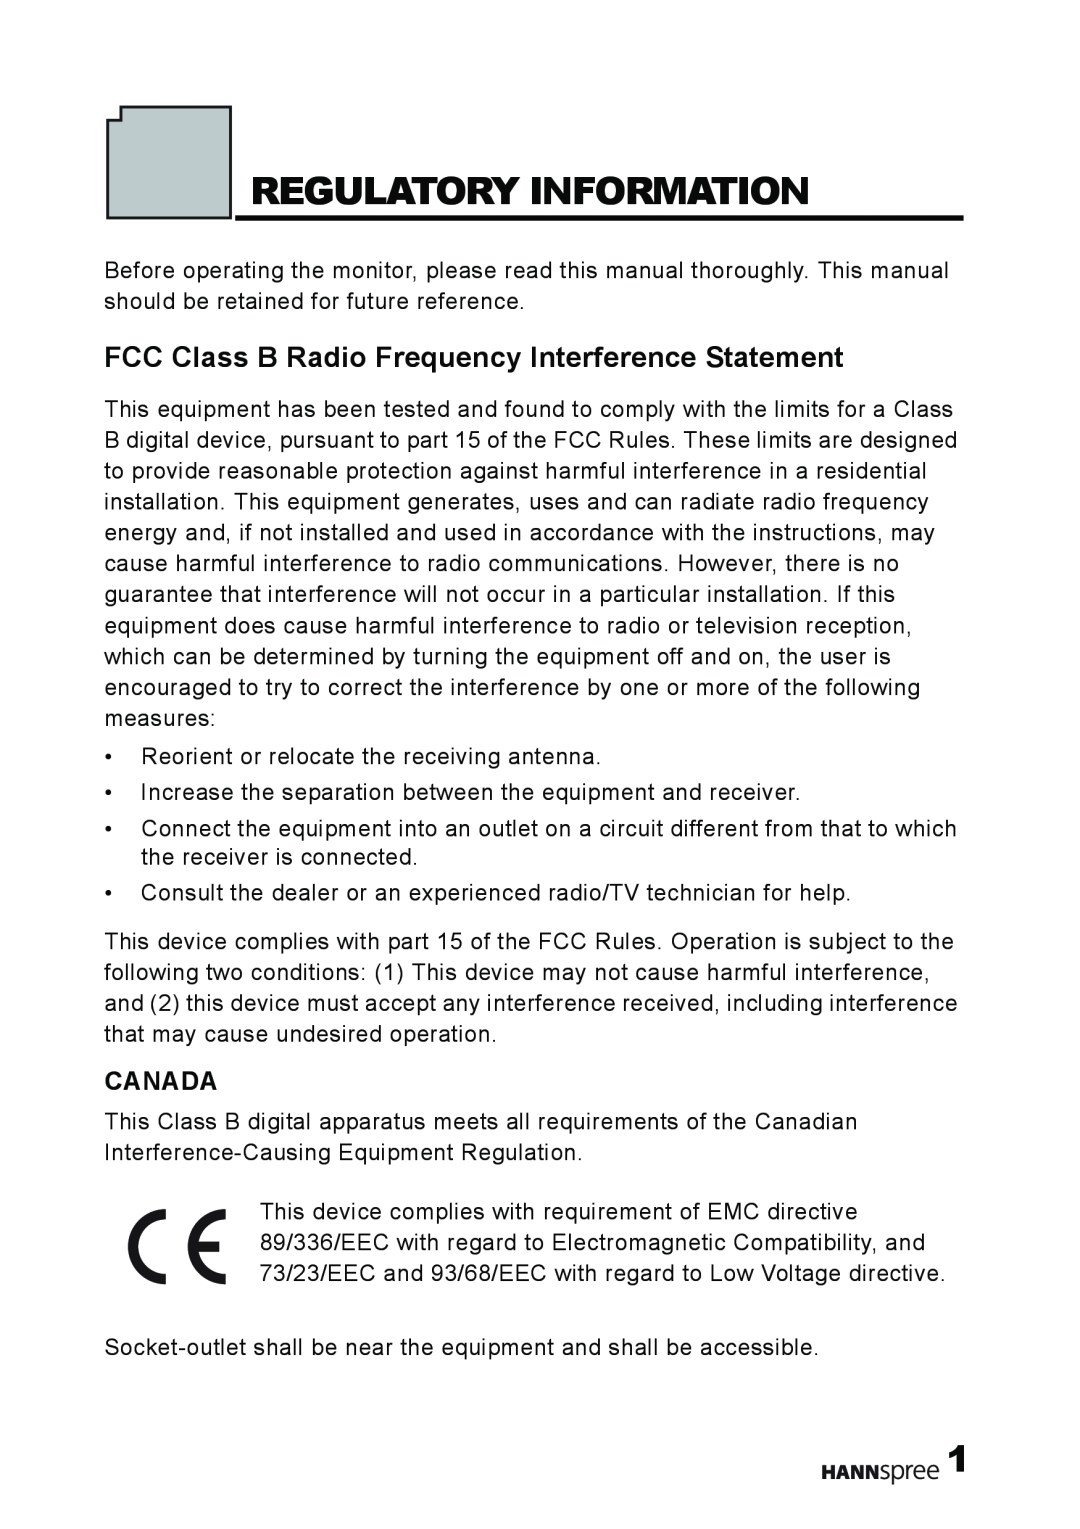 HANNspree XM manual Regulatory Information, FCC Class B Radio Frequency Interference Statement, Canada 